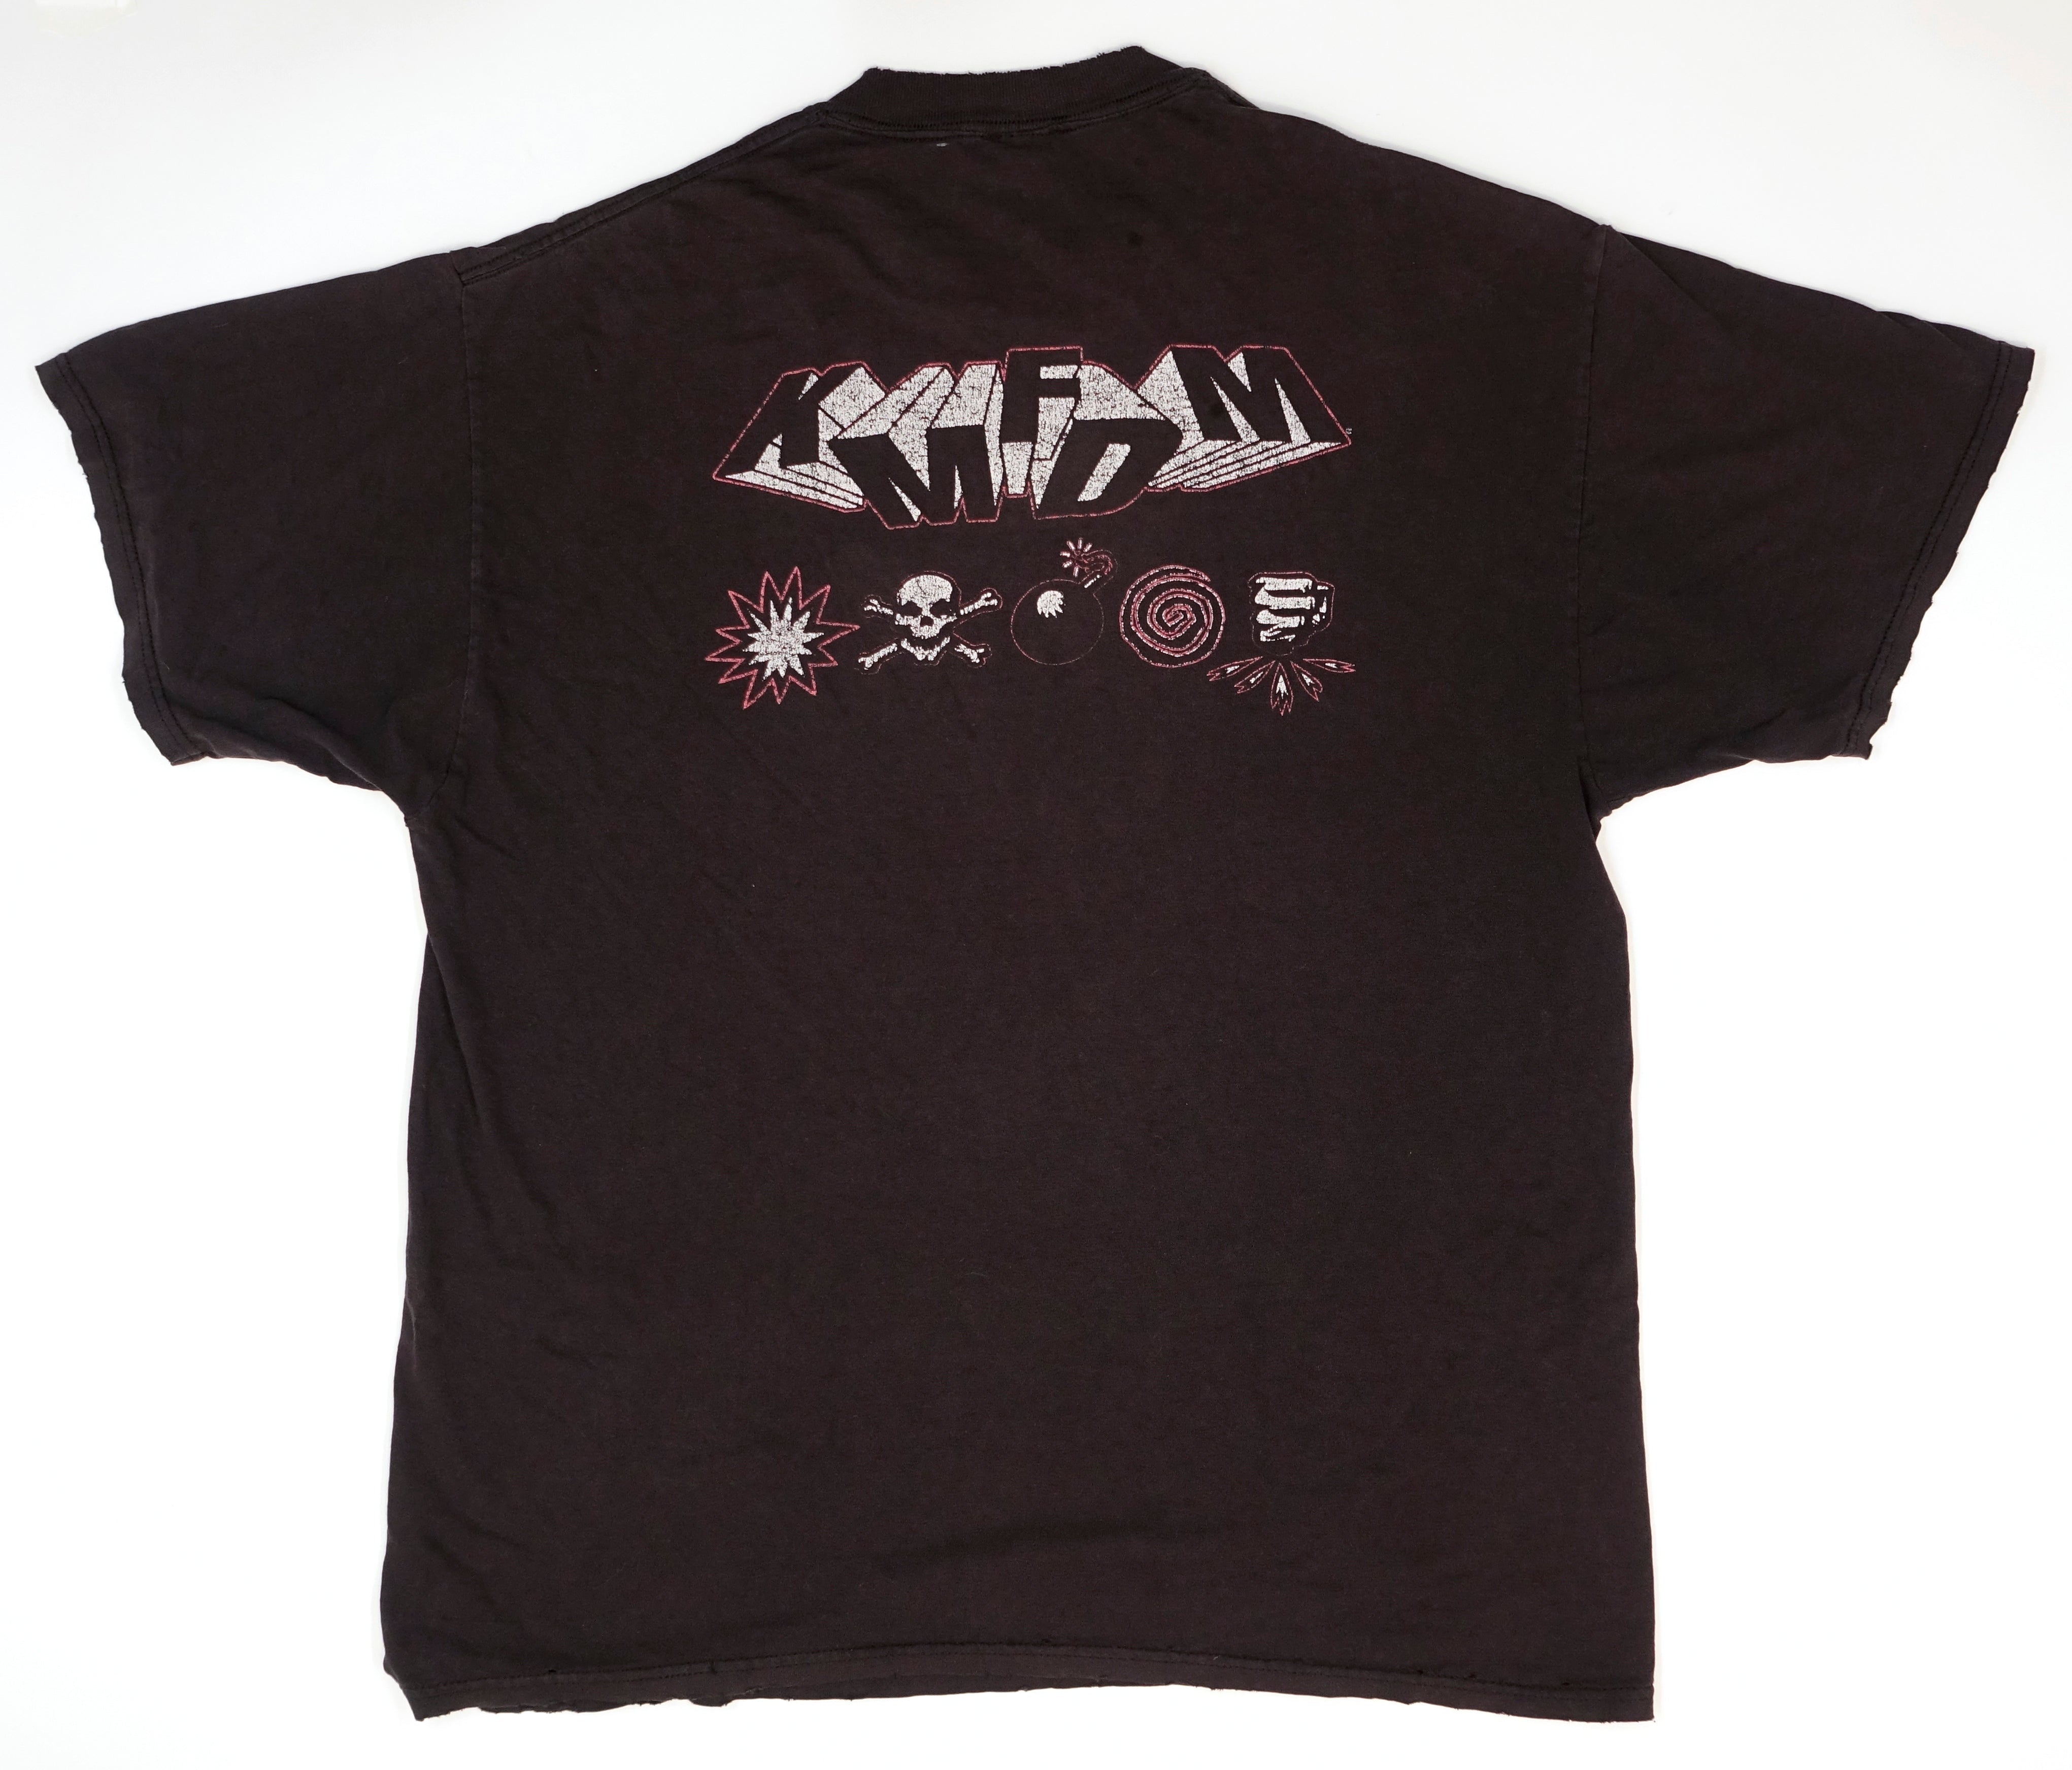 KMFDM – Symbols 1997 Tour Shirt Size XL